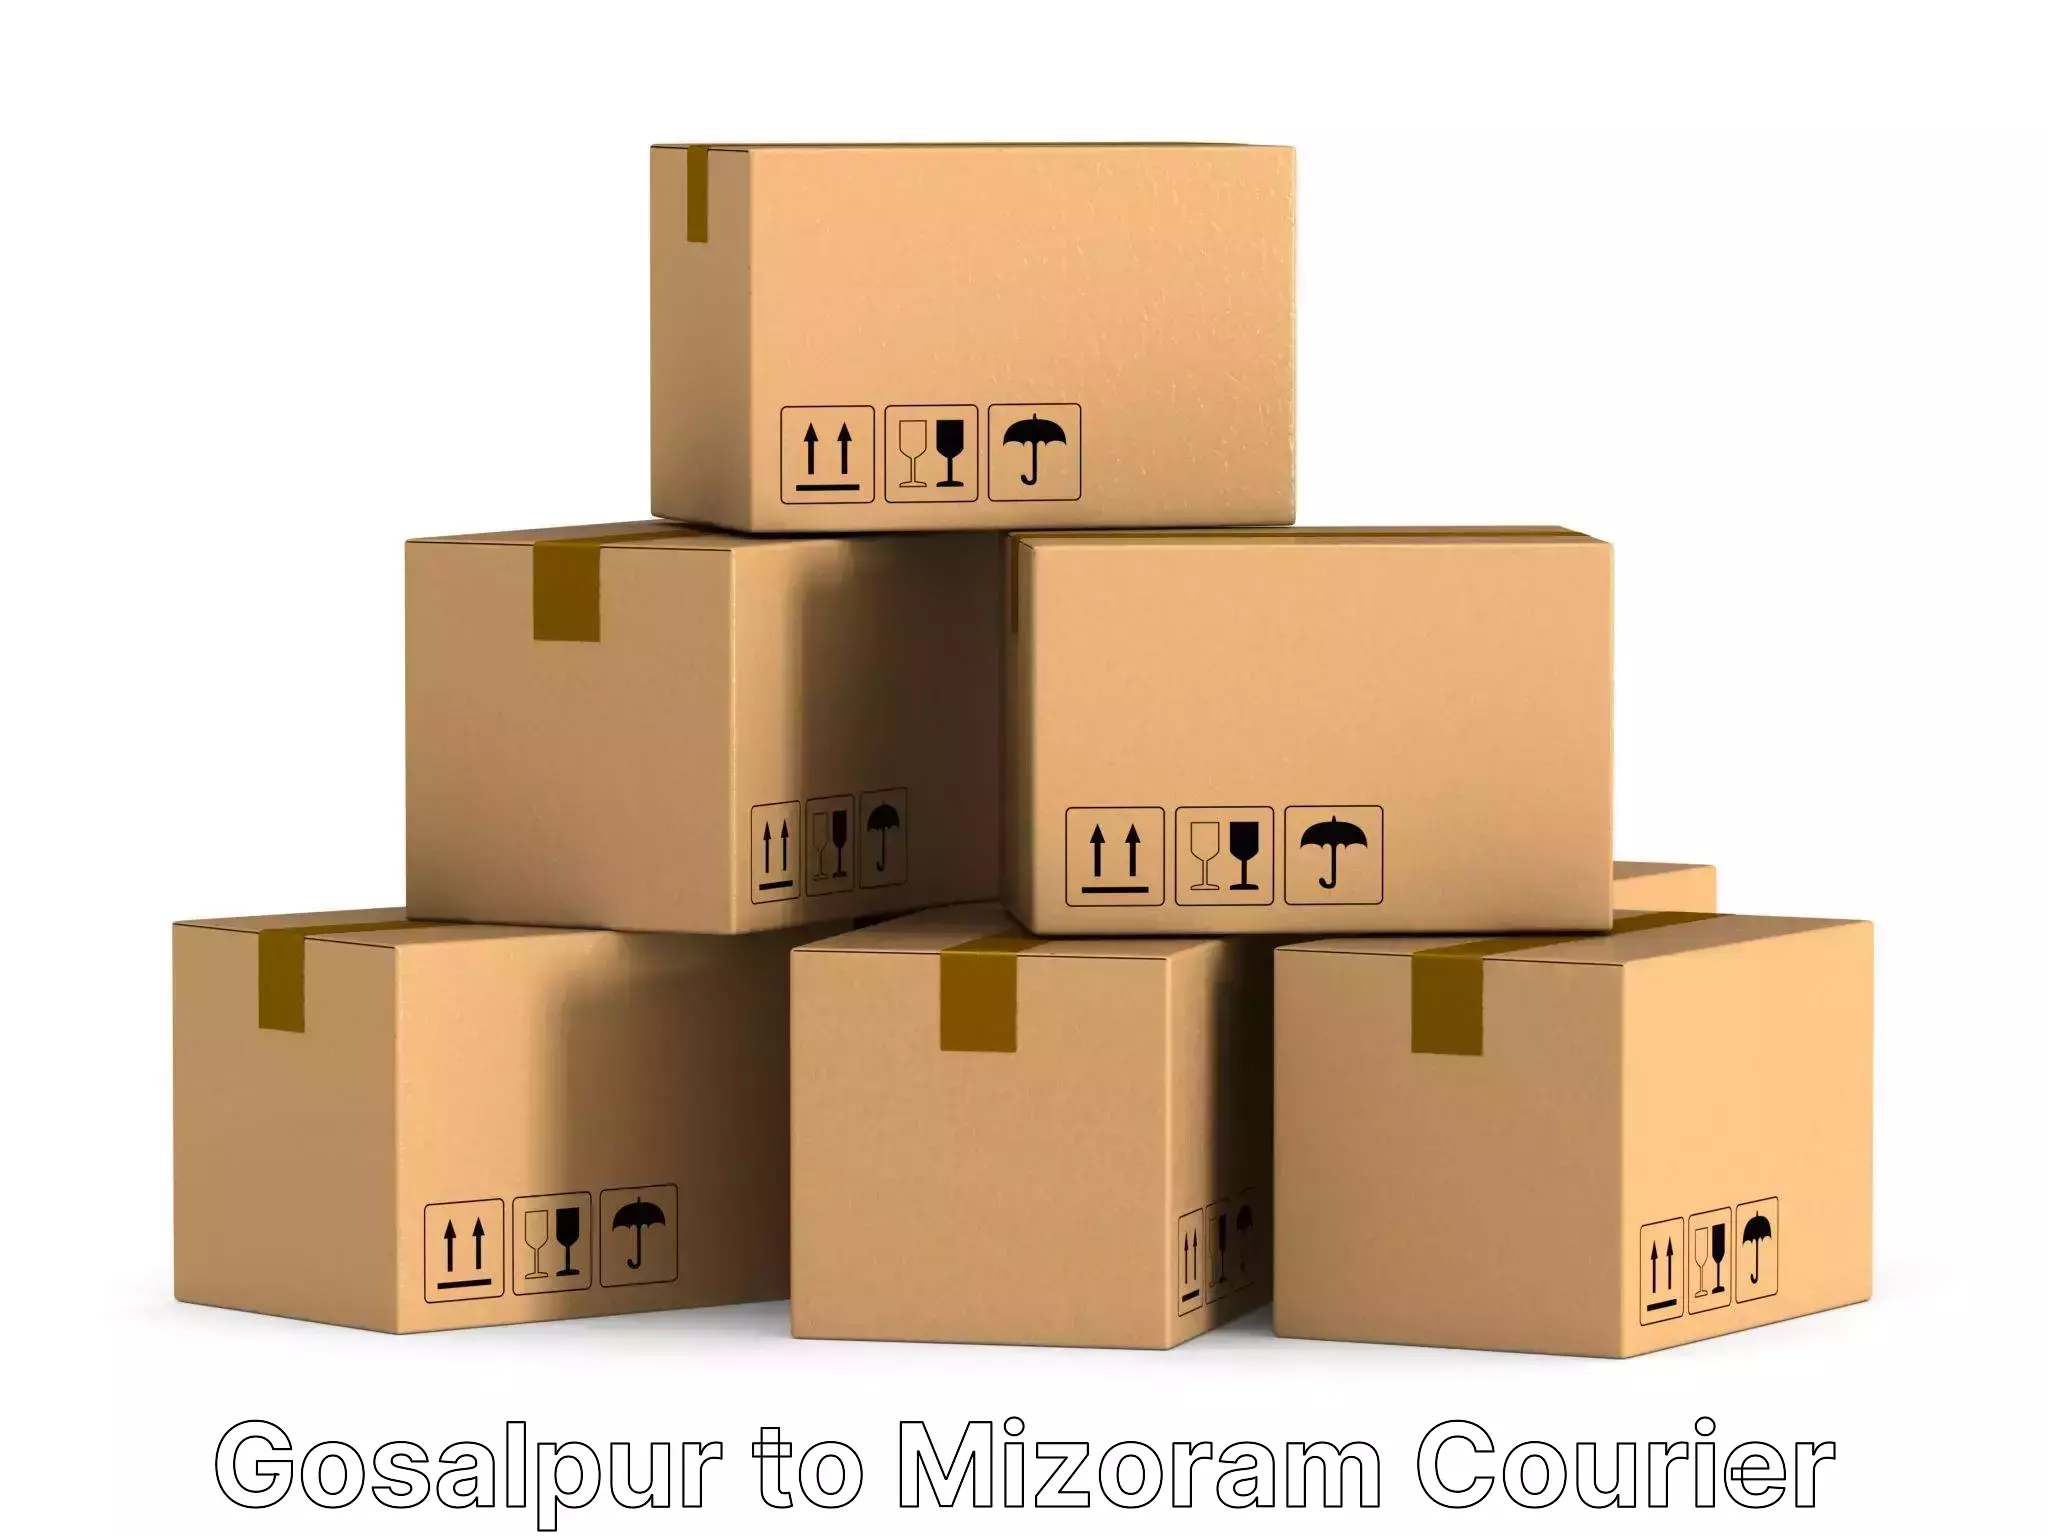 Efficient relocation services Gosalpur to Mizoram